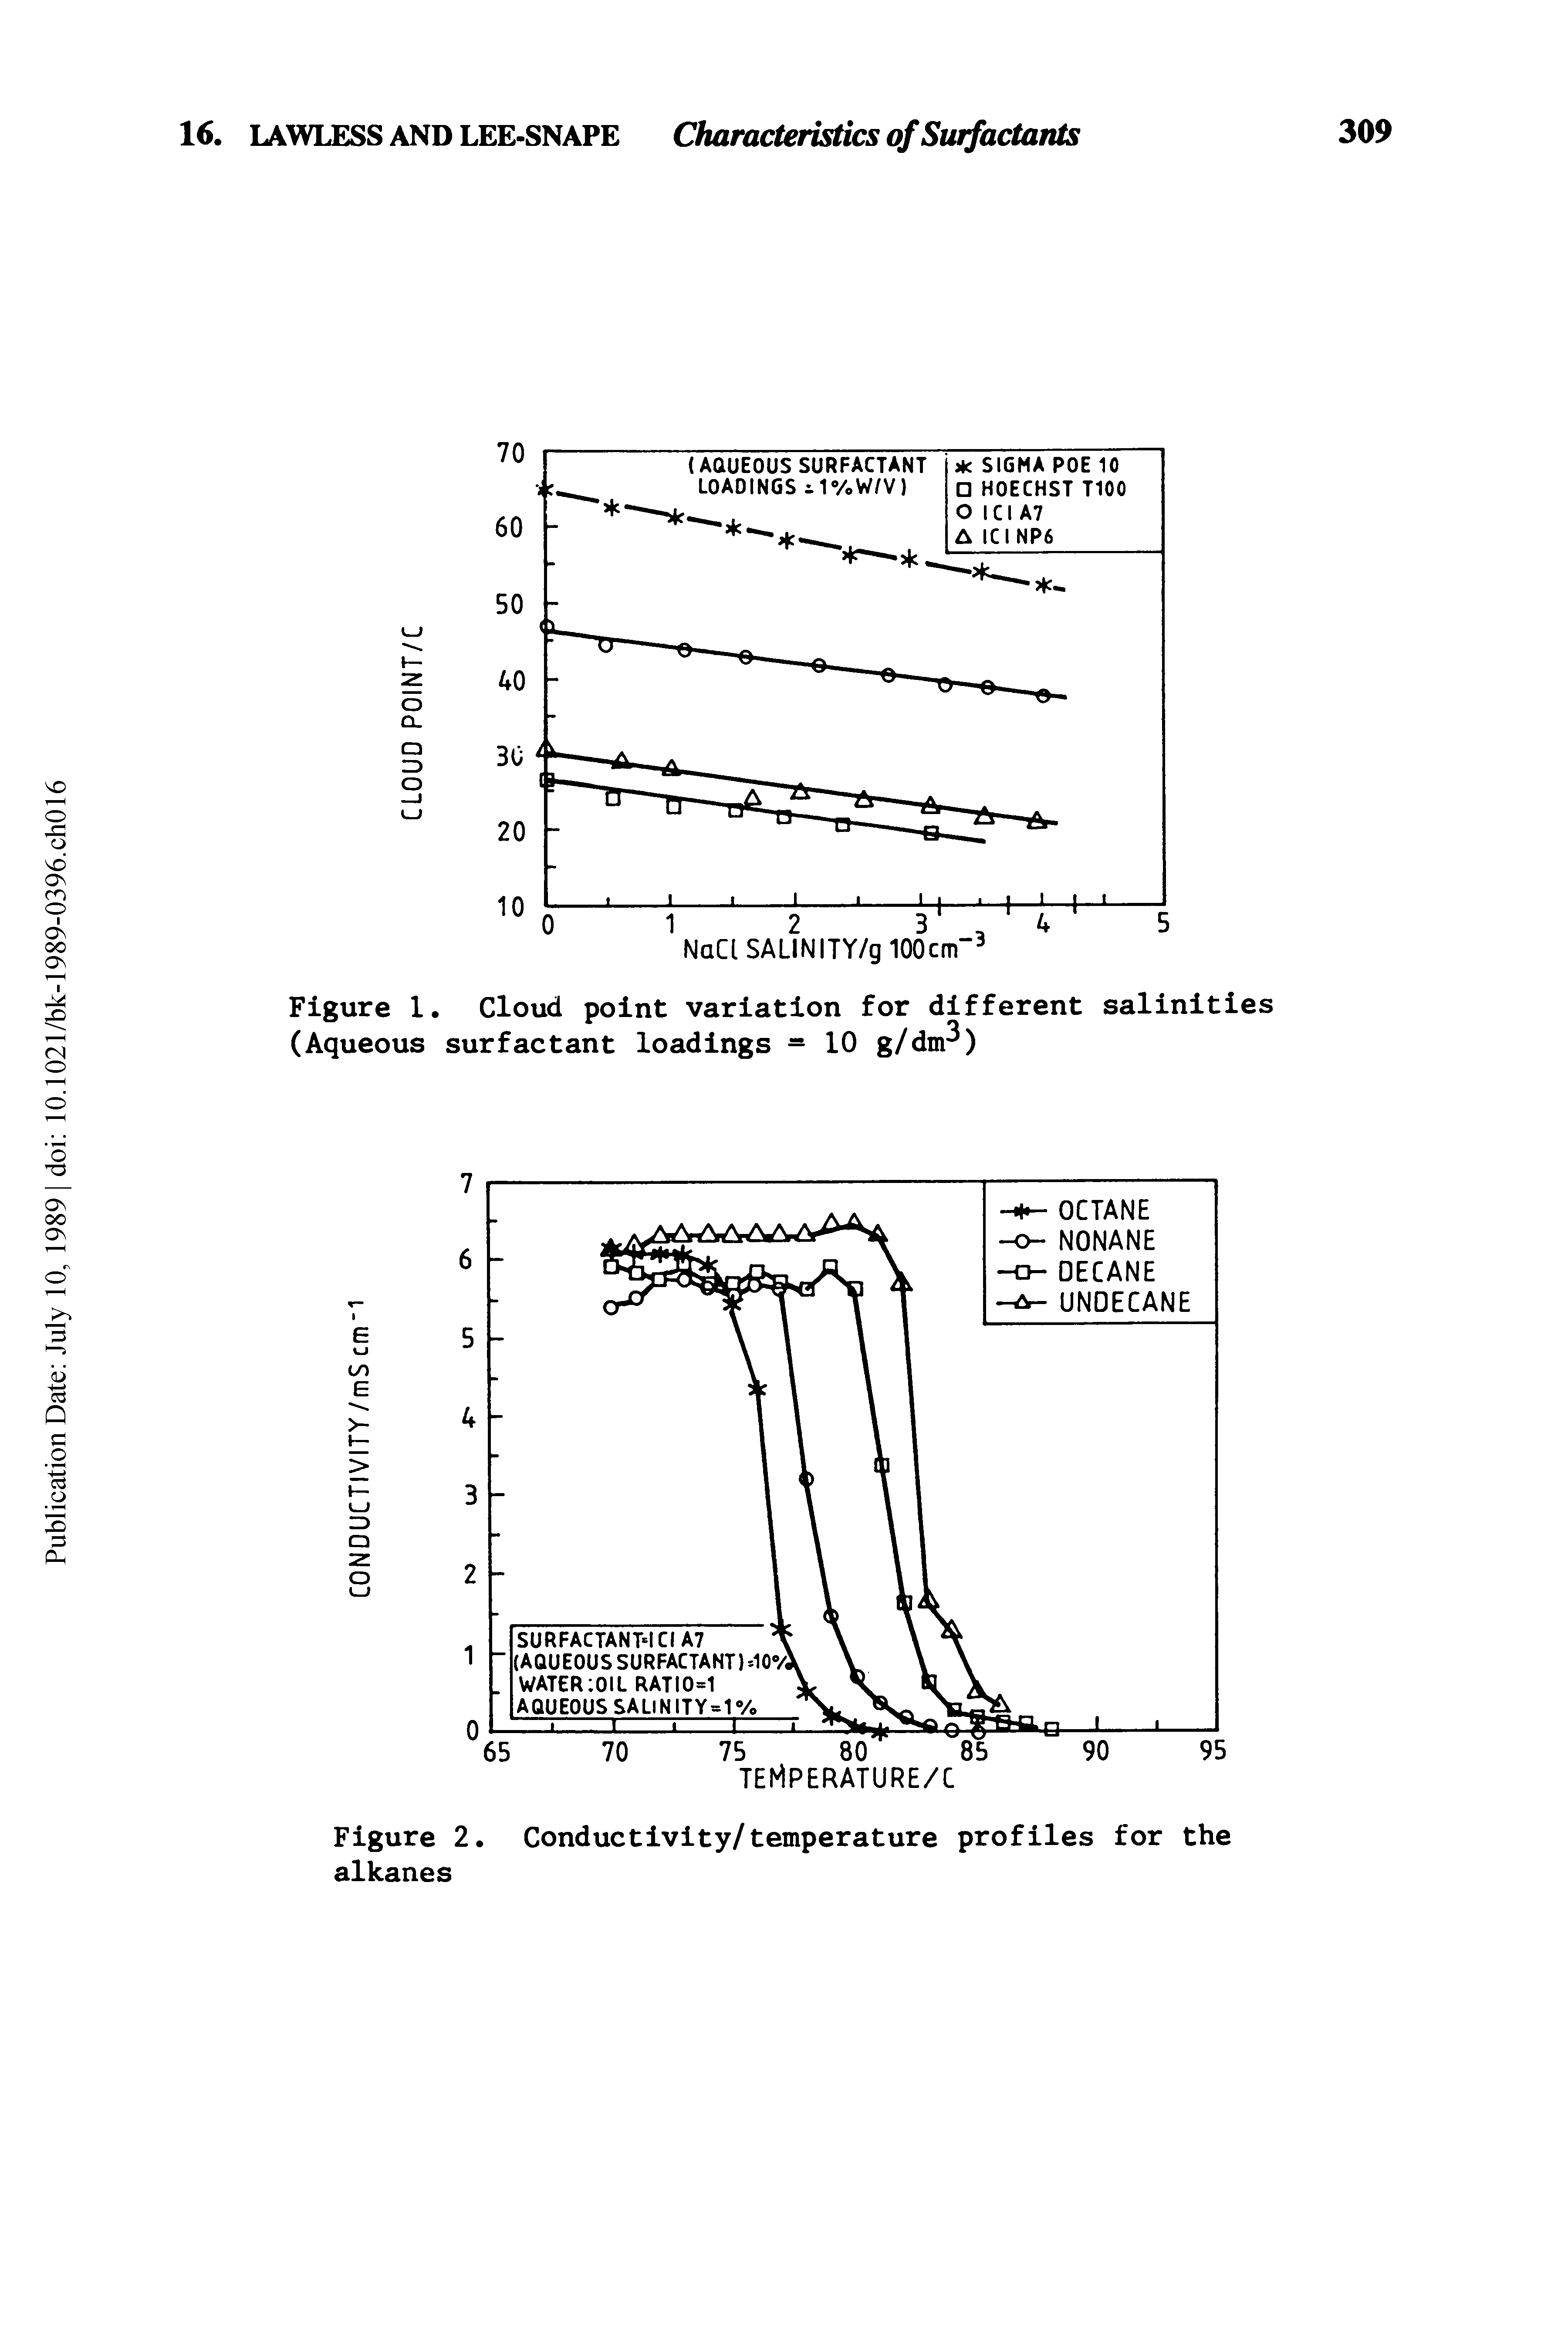 Figure 1. Cloud point variation for different salinities (Aqueous surfactant loadings - 10 g/dnP)...